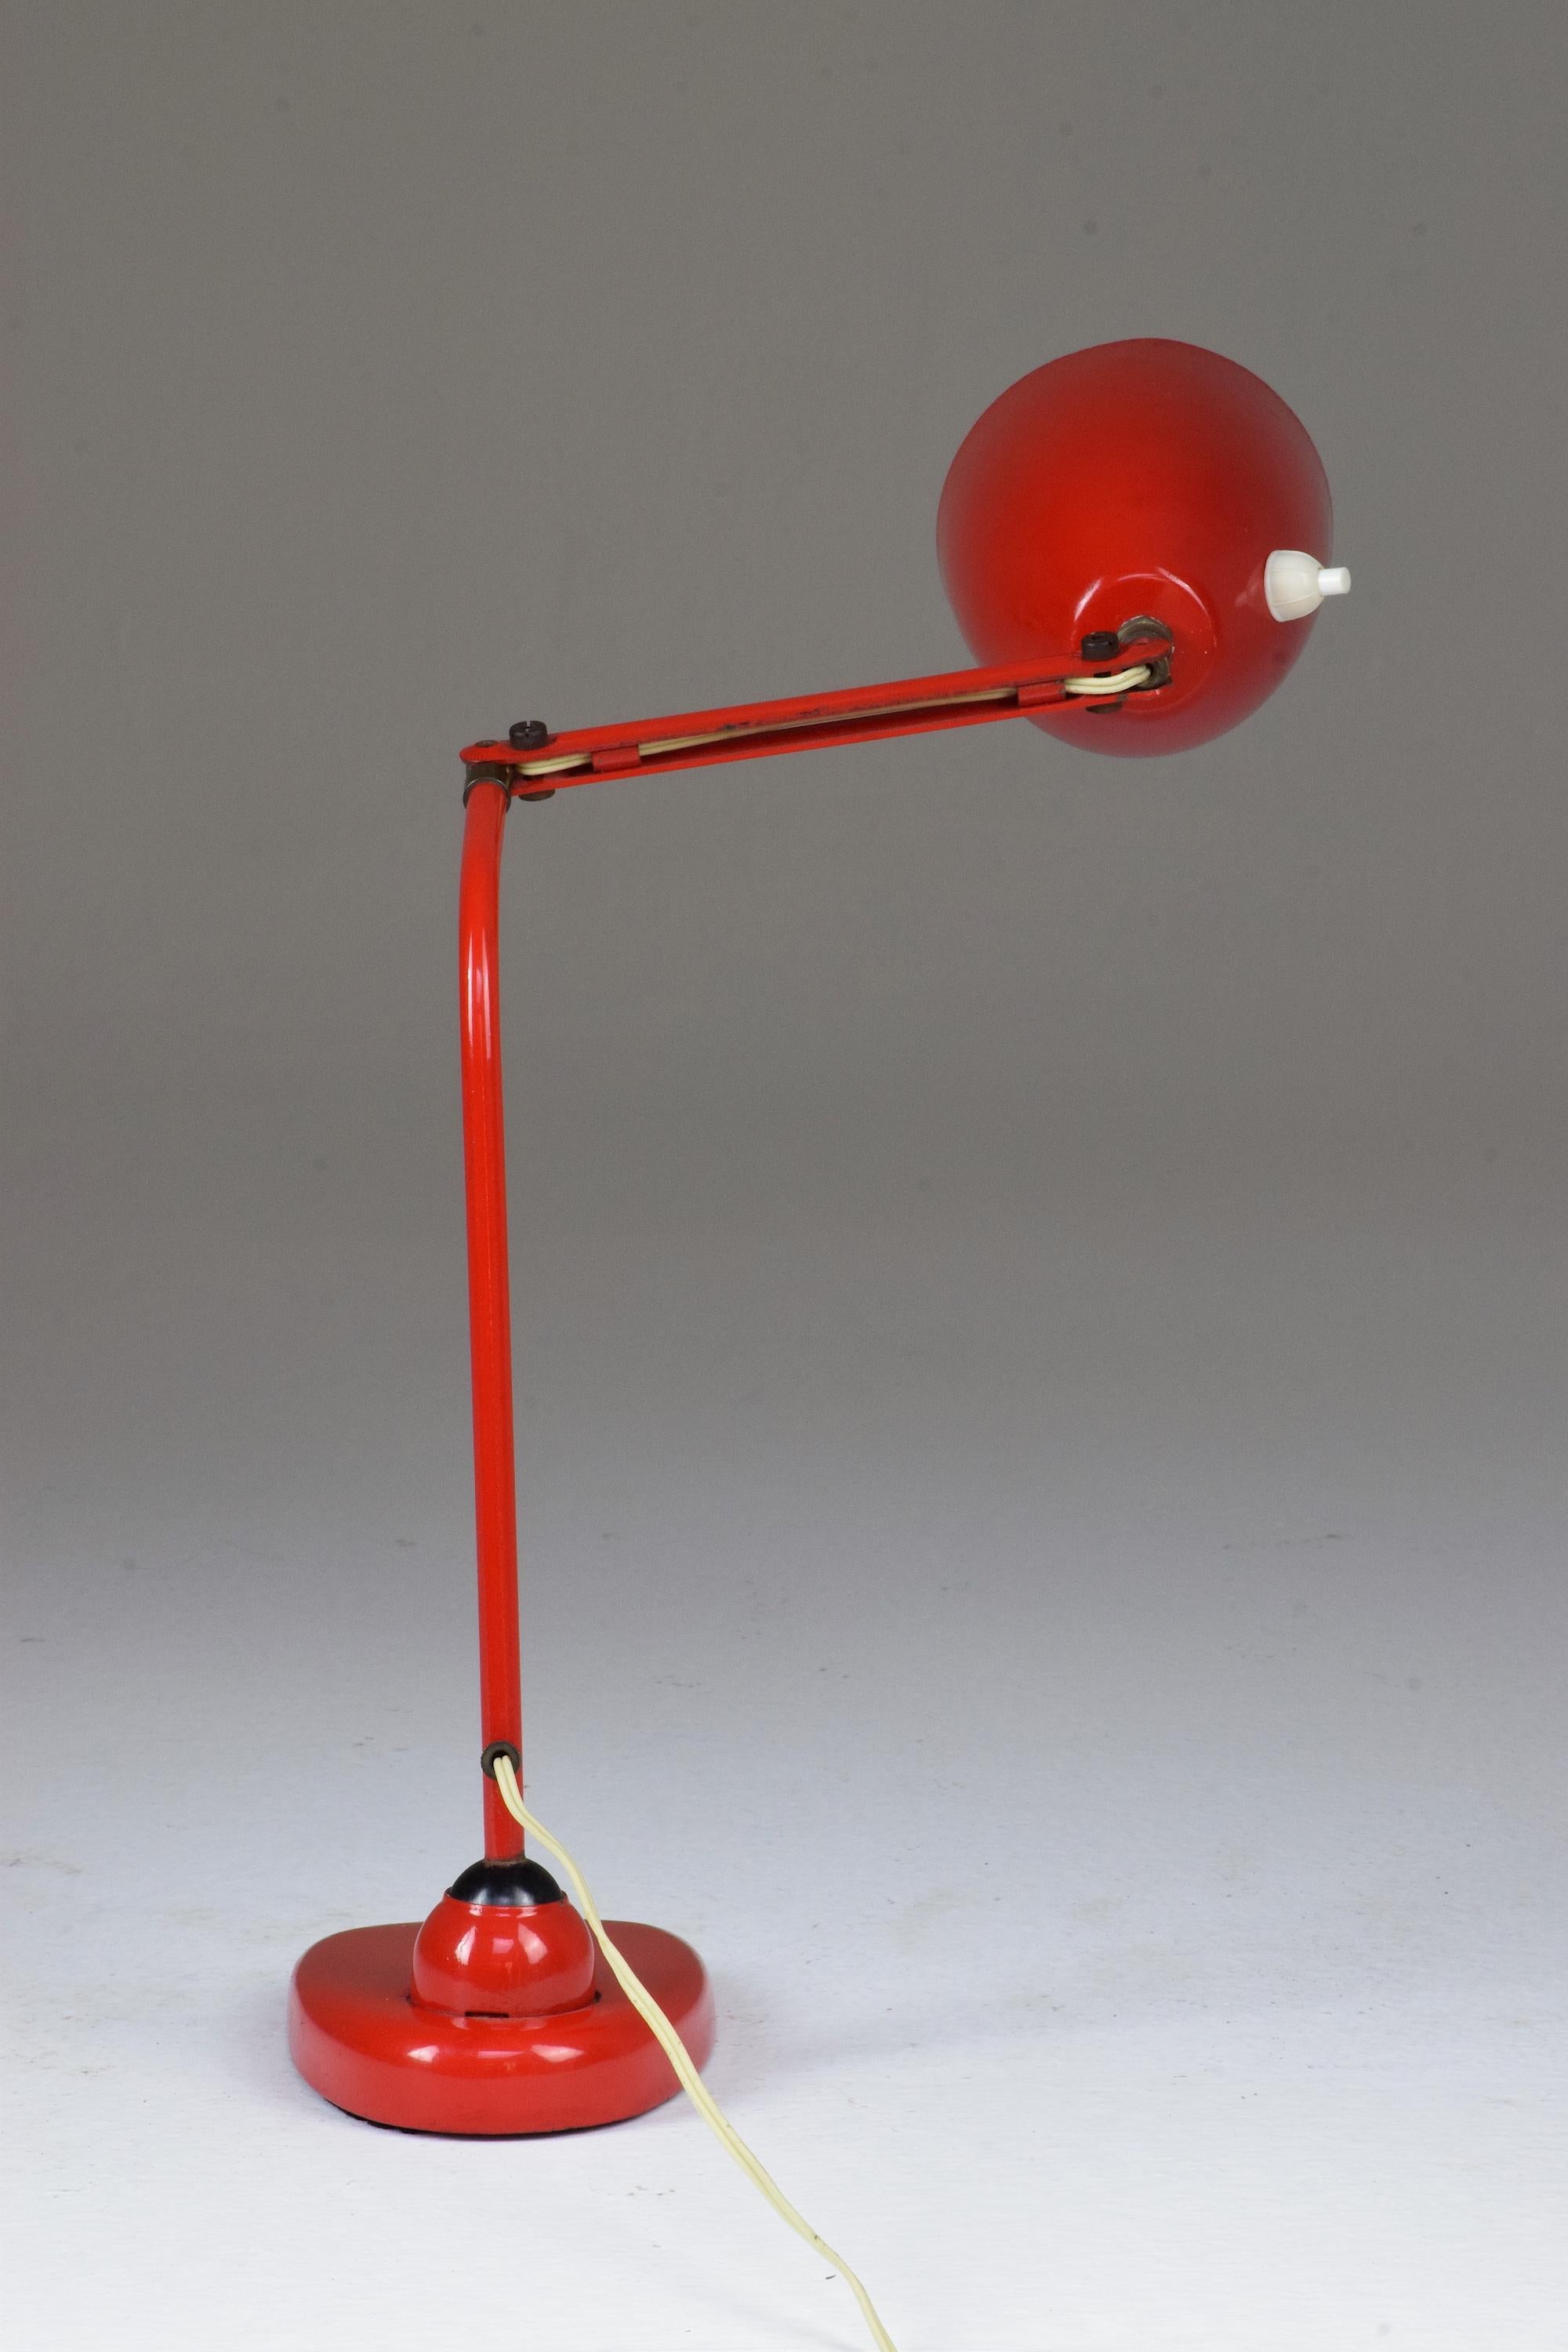 Italian Vintage Midcentury Desk Lamp in the style of Stilnovo 1